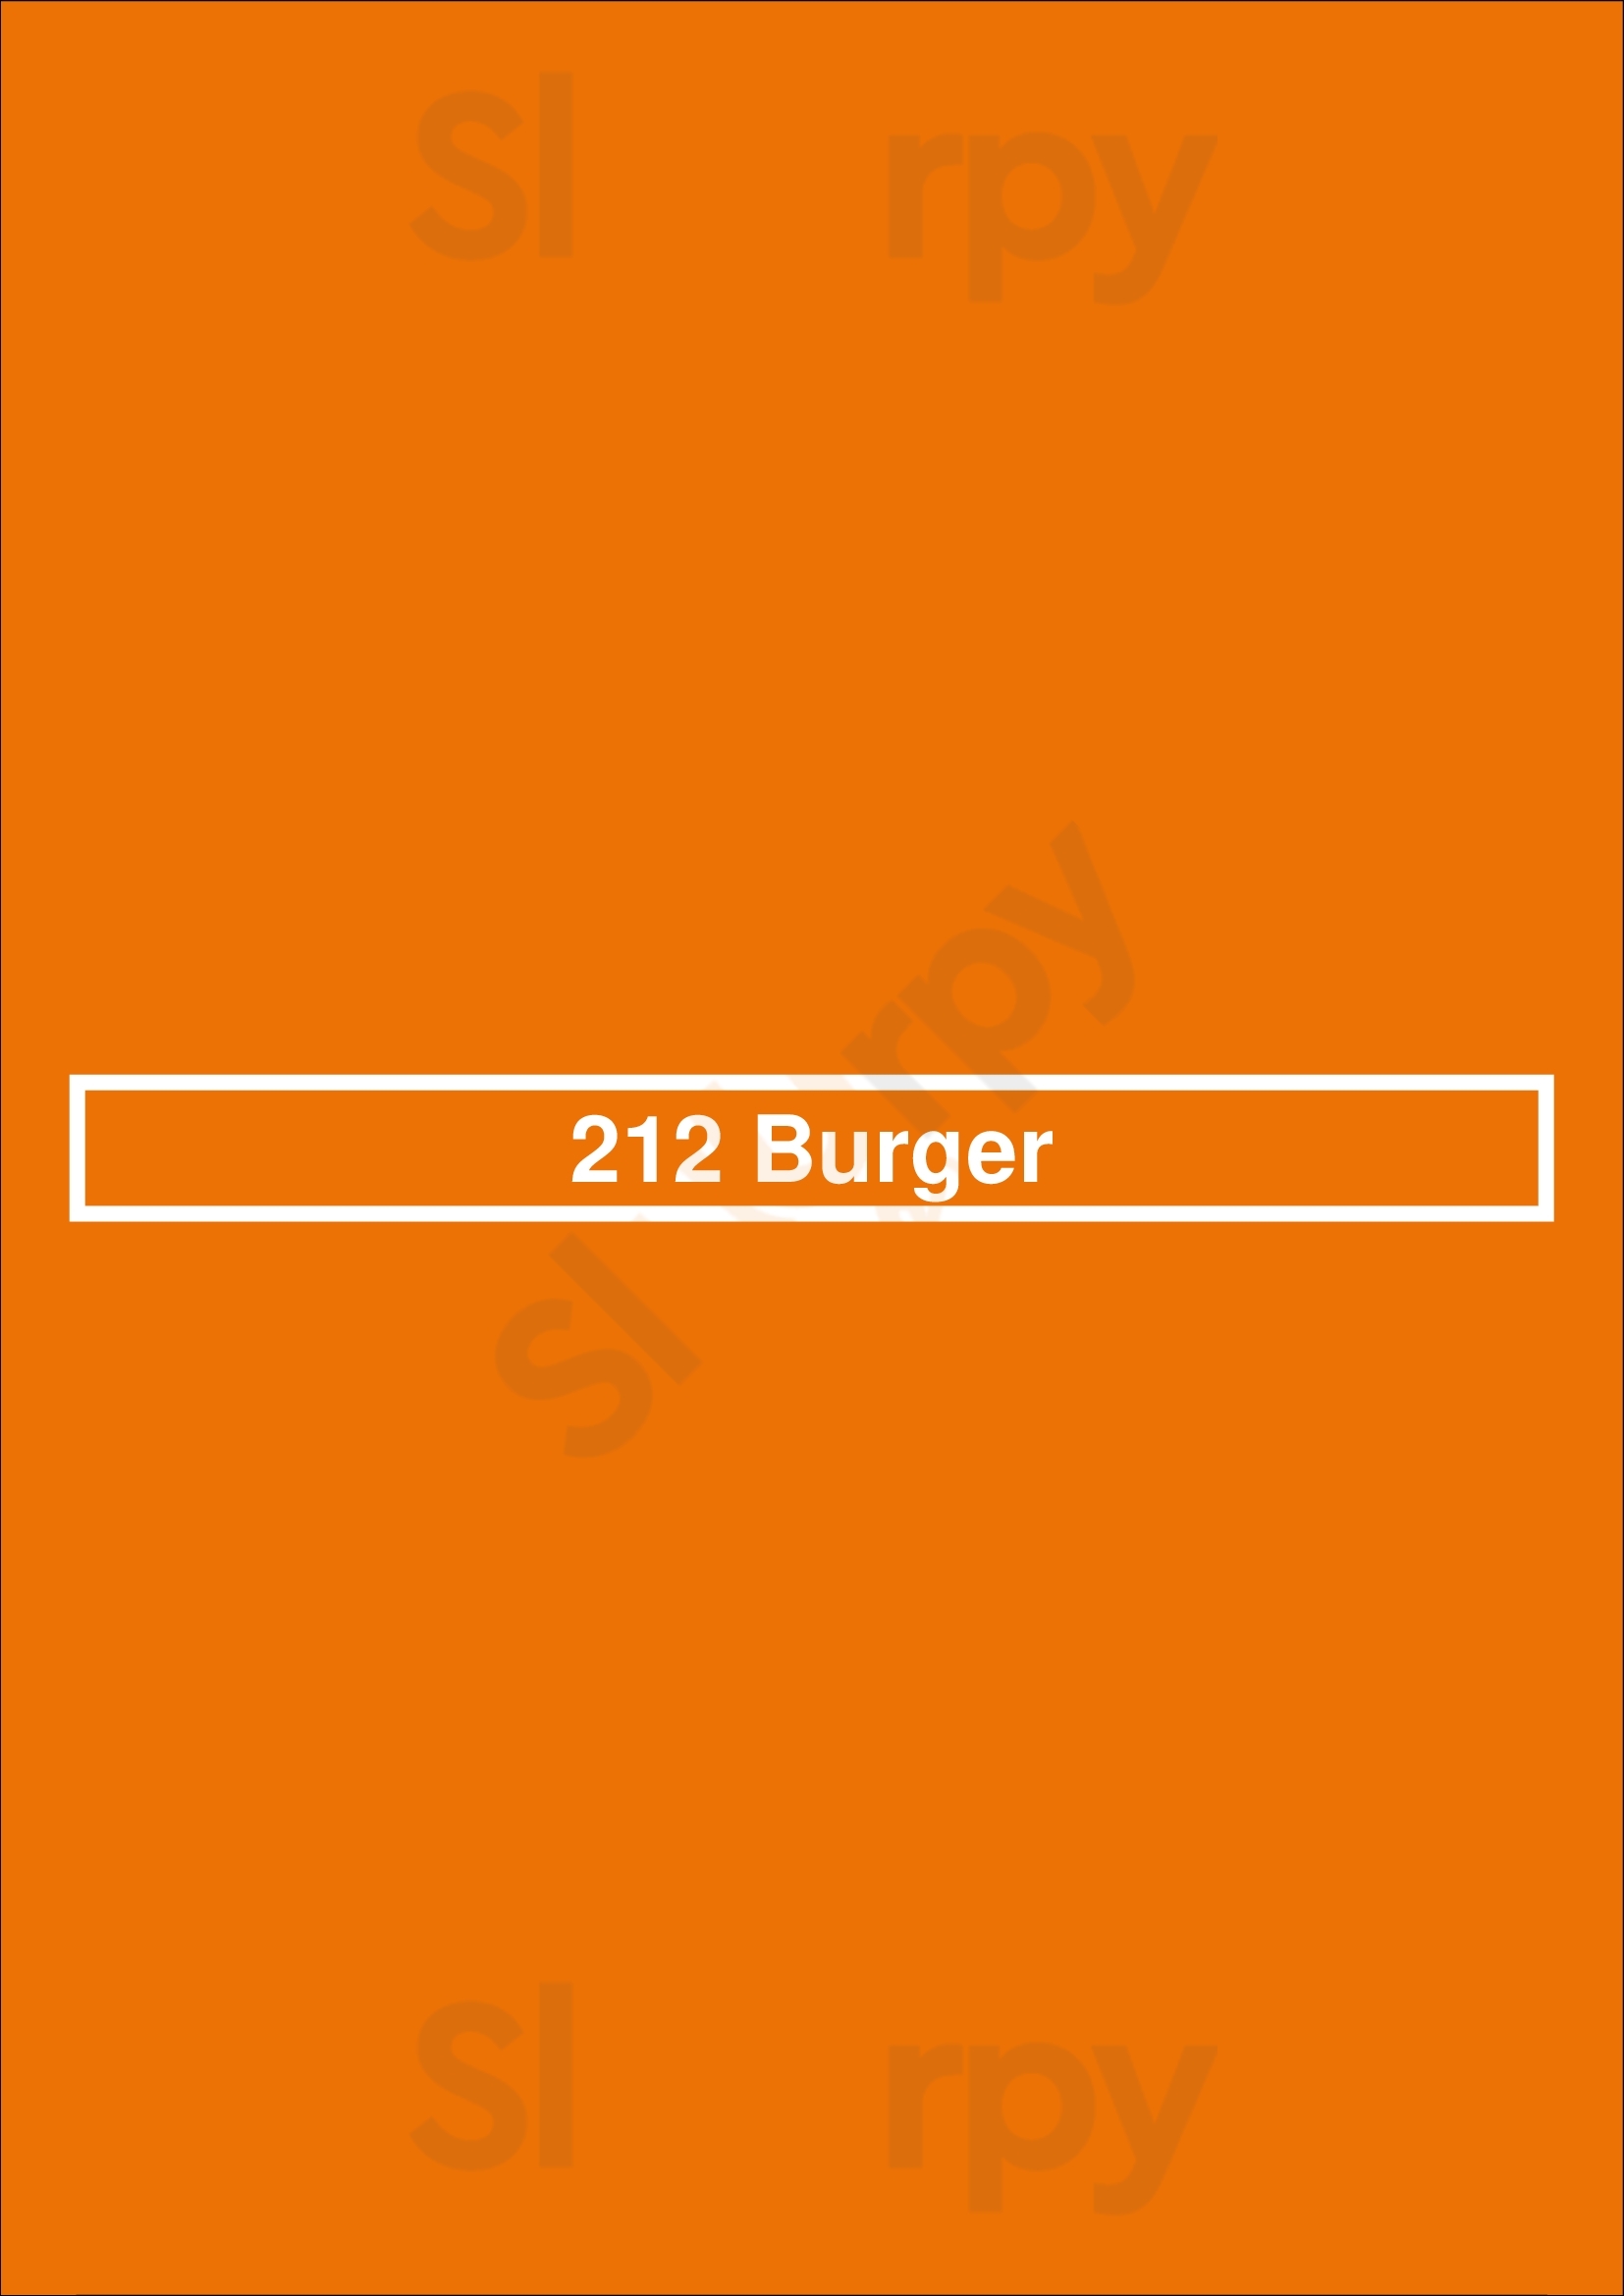 212 Burger São Paulo Menu - 1